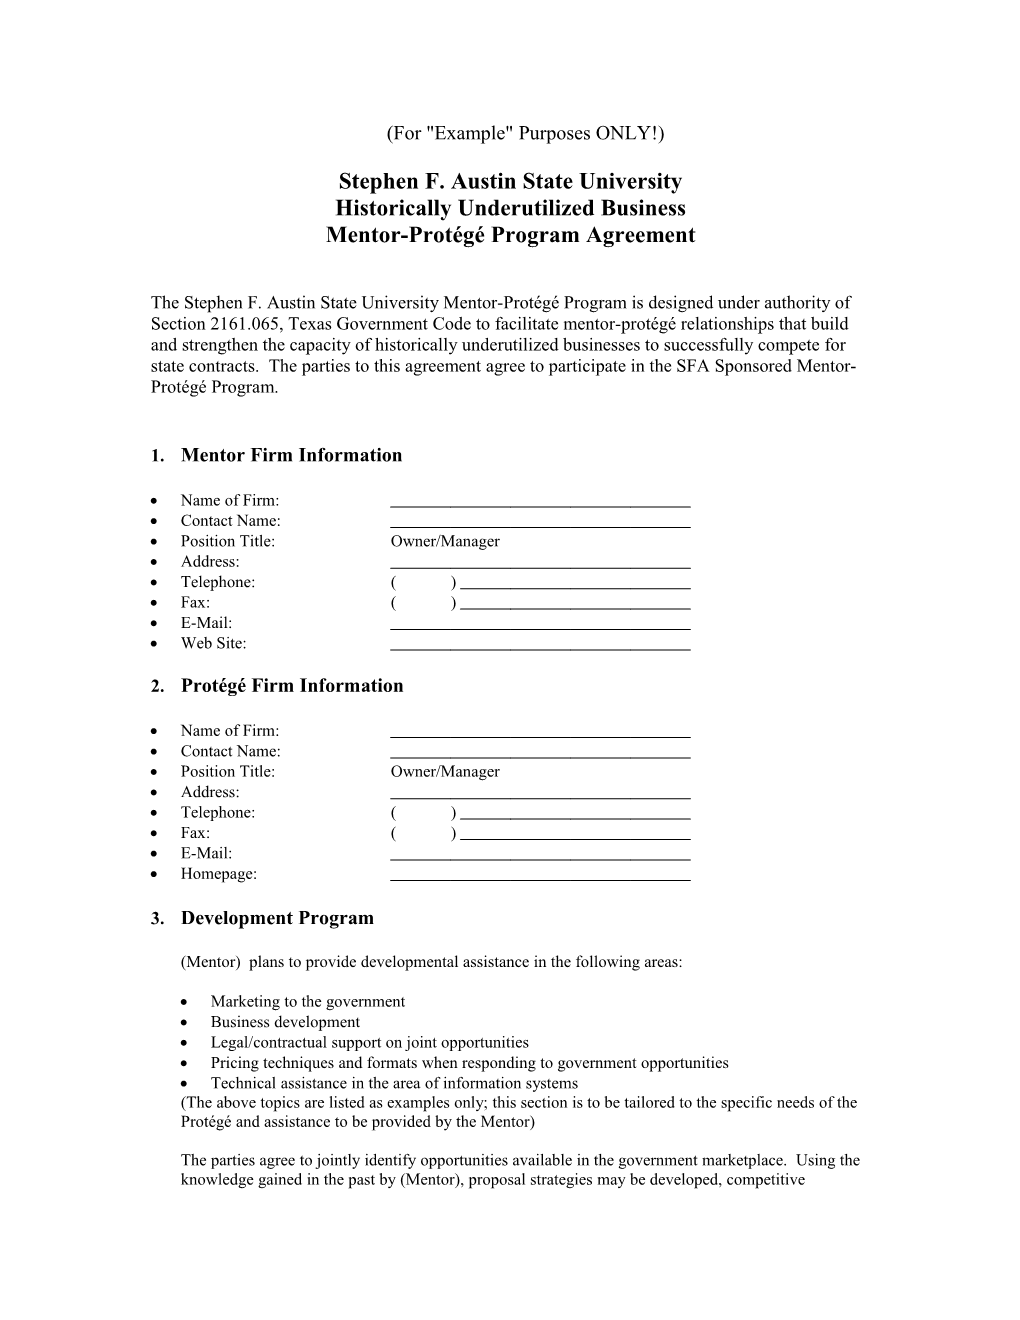 SFA Mentor Protégé Program Model Agreement